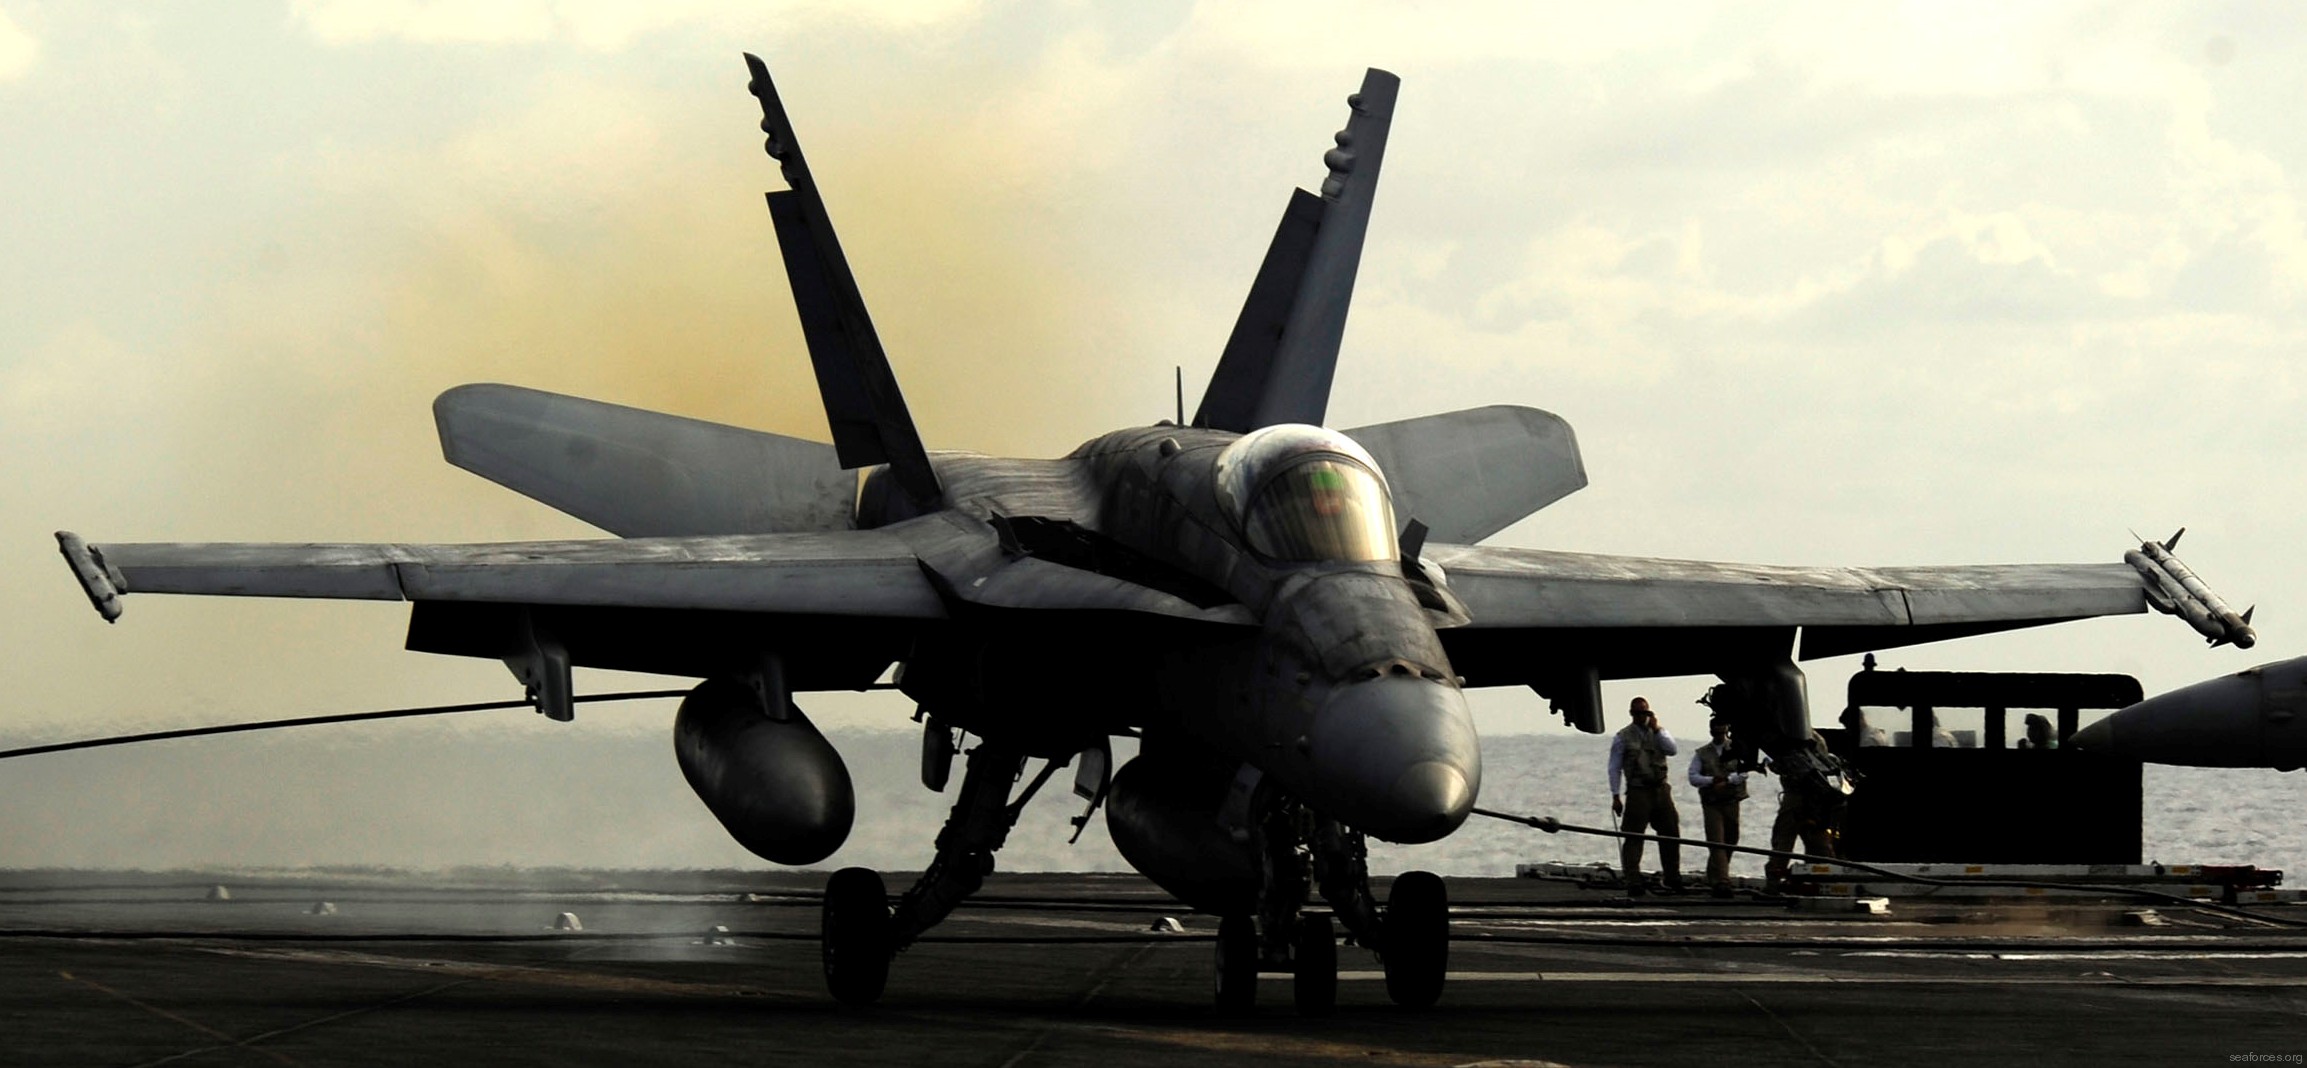 vfa-192 golden dragons strike fighter squadron navy f/a-18c hornet carrier air wing cvw-9 uss john c. stennis cvn-74 37